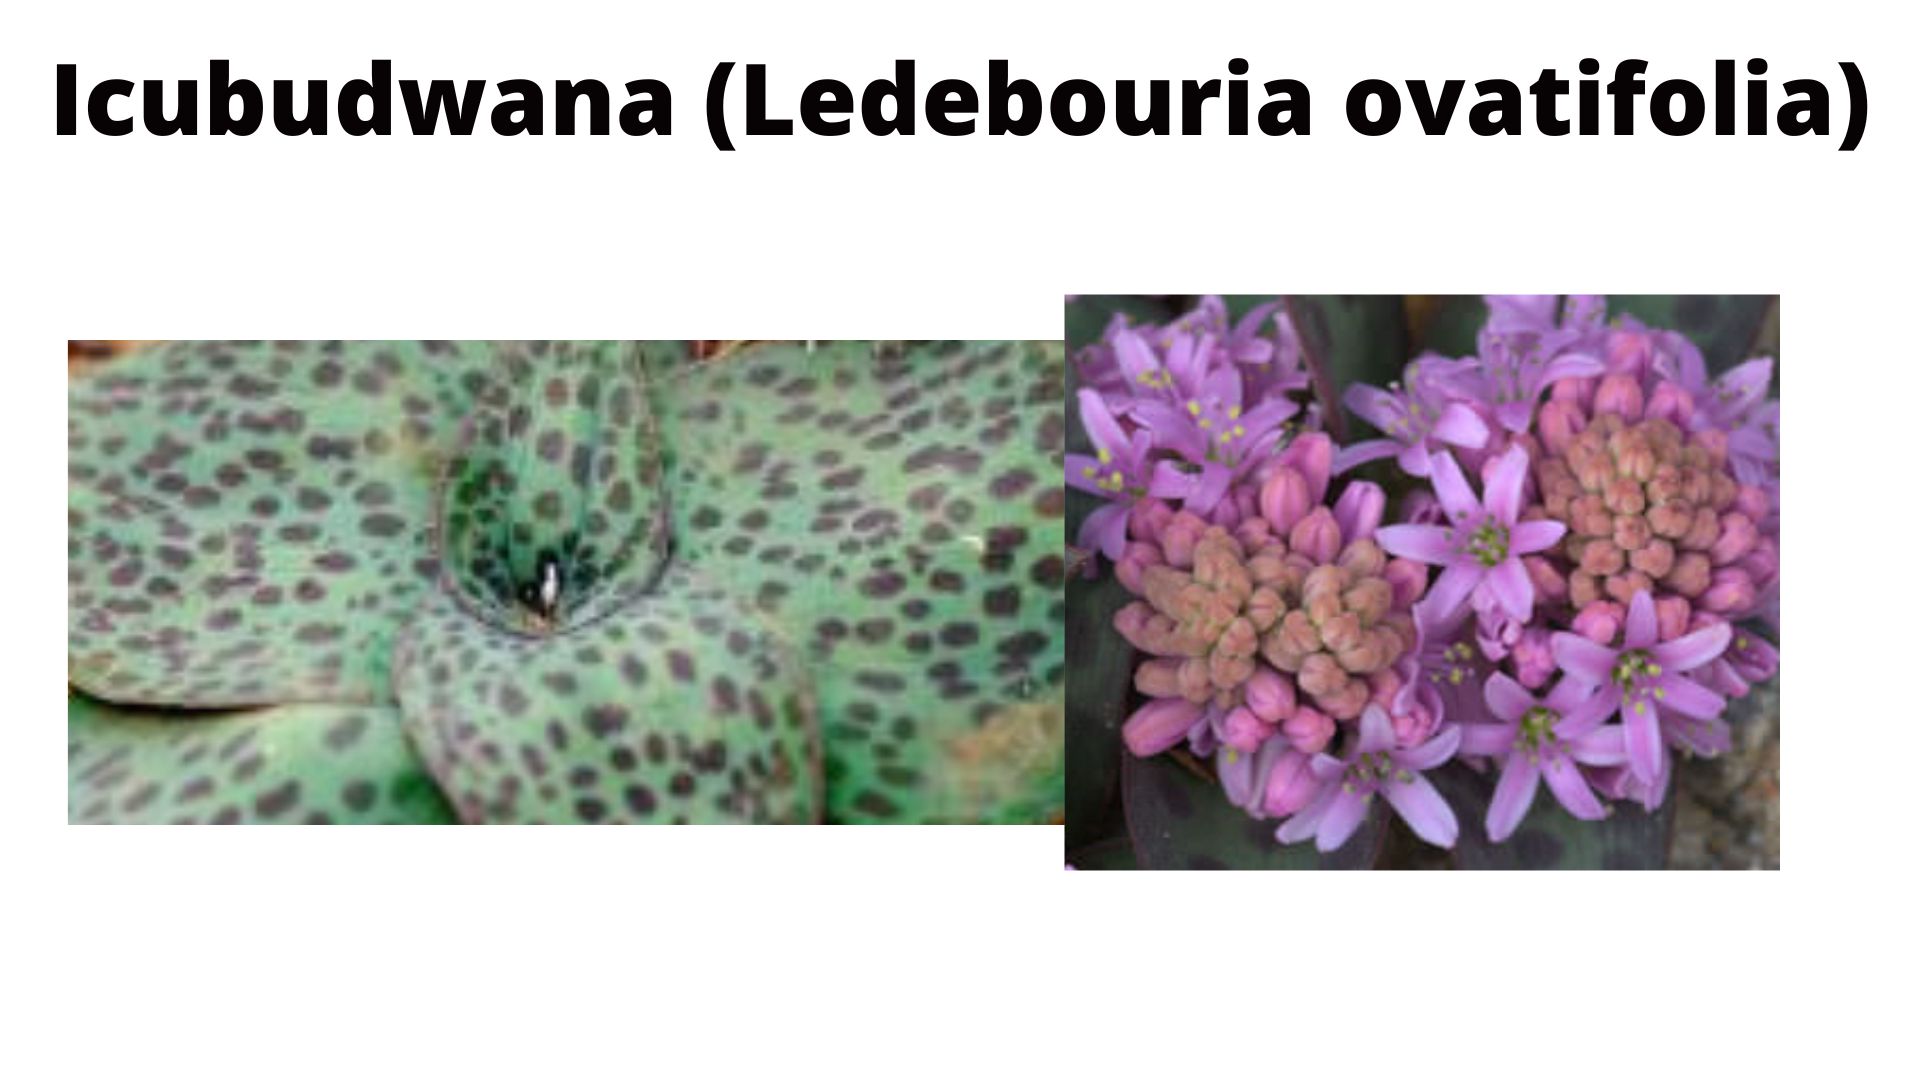 You are currently viewing Ledebouria ovatifolia (Icubudwana)